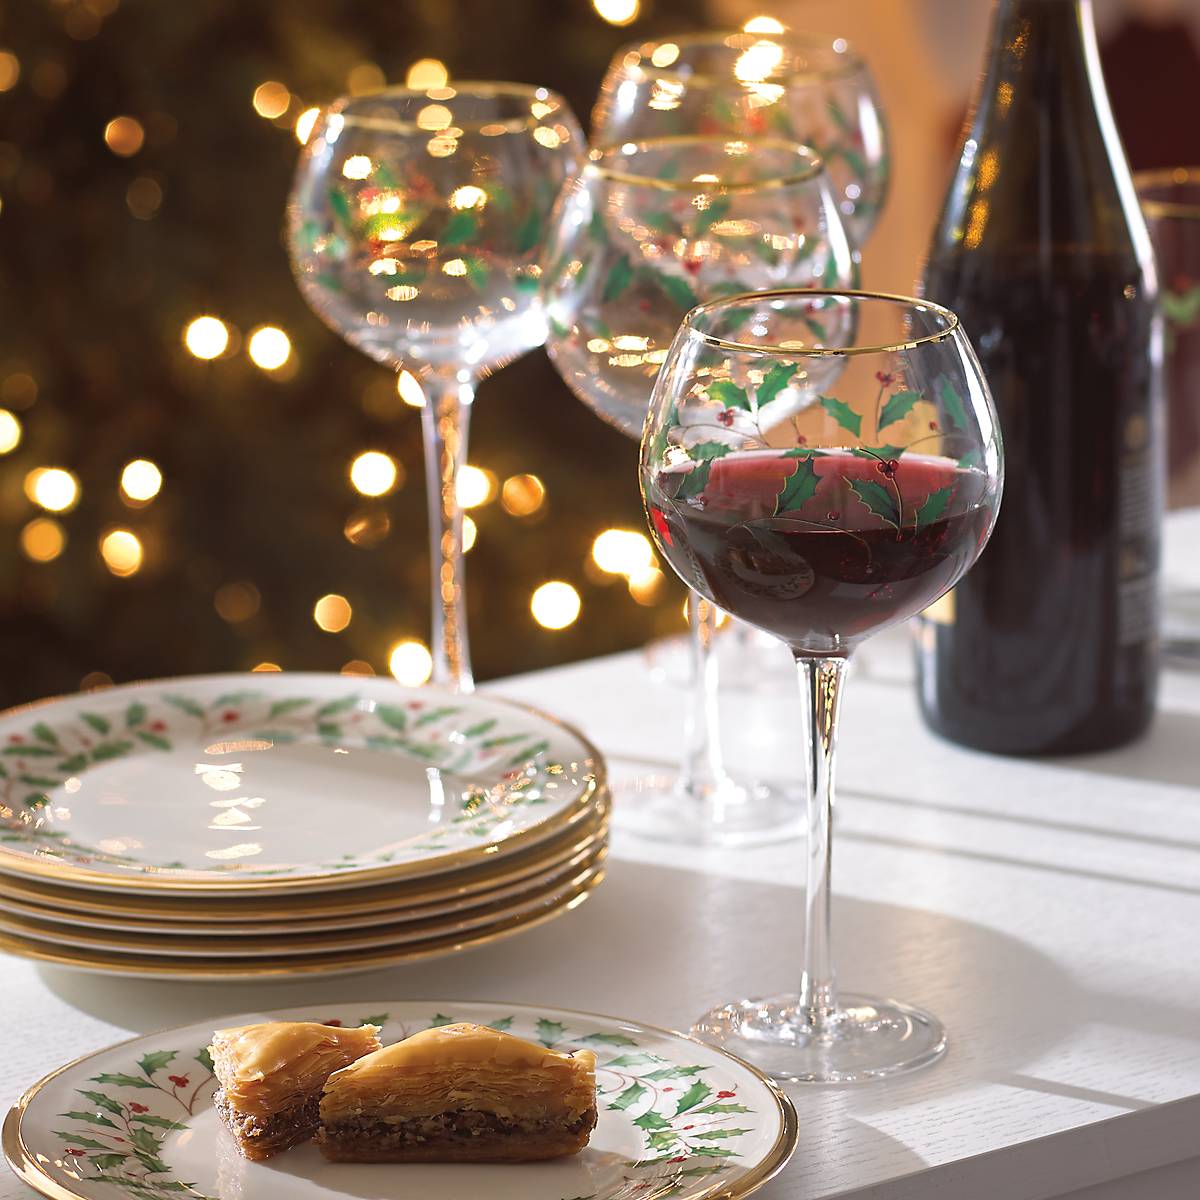 Lenox 856101 Holiday 4-Piece Wine Glass Set: Highball